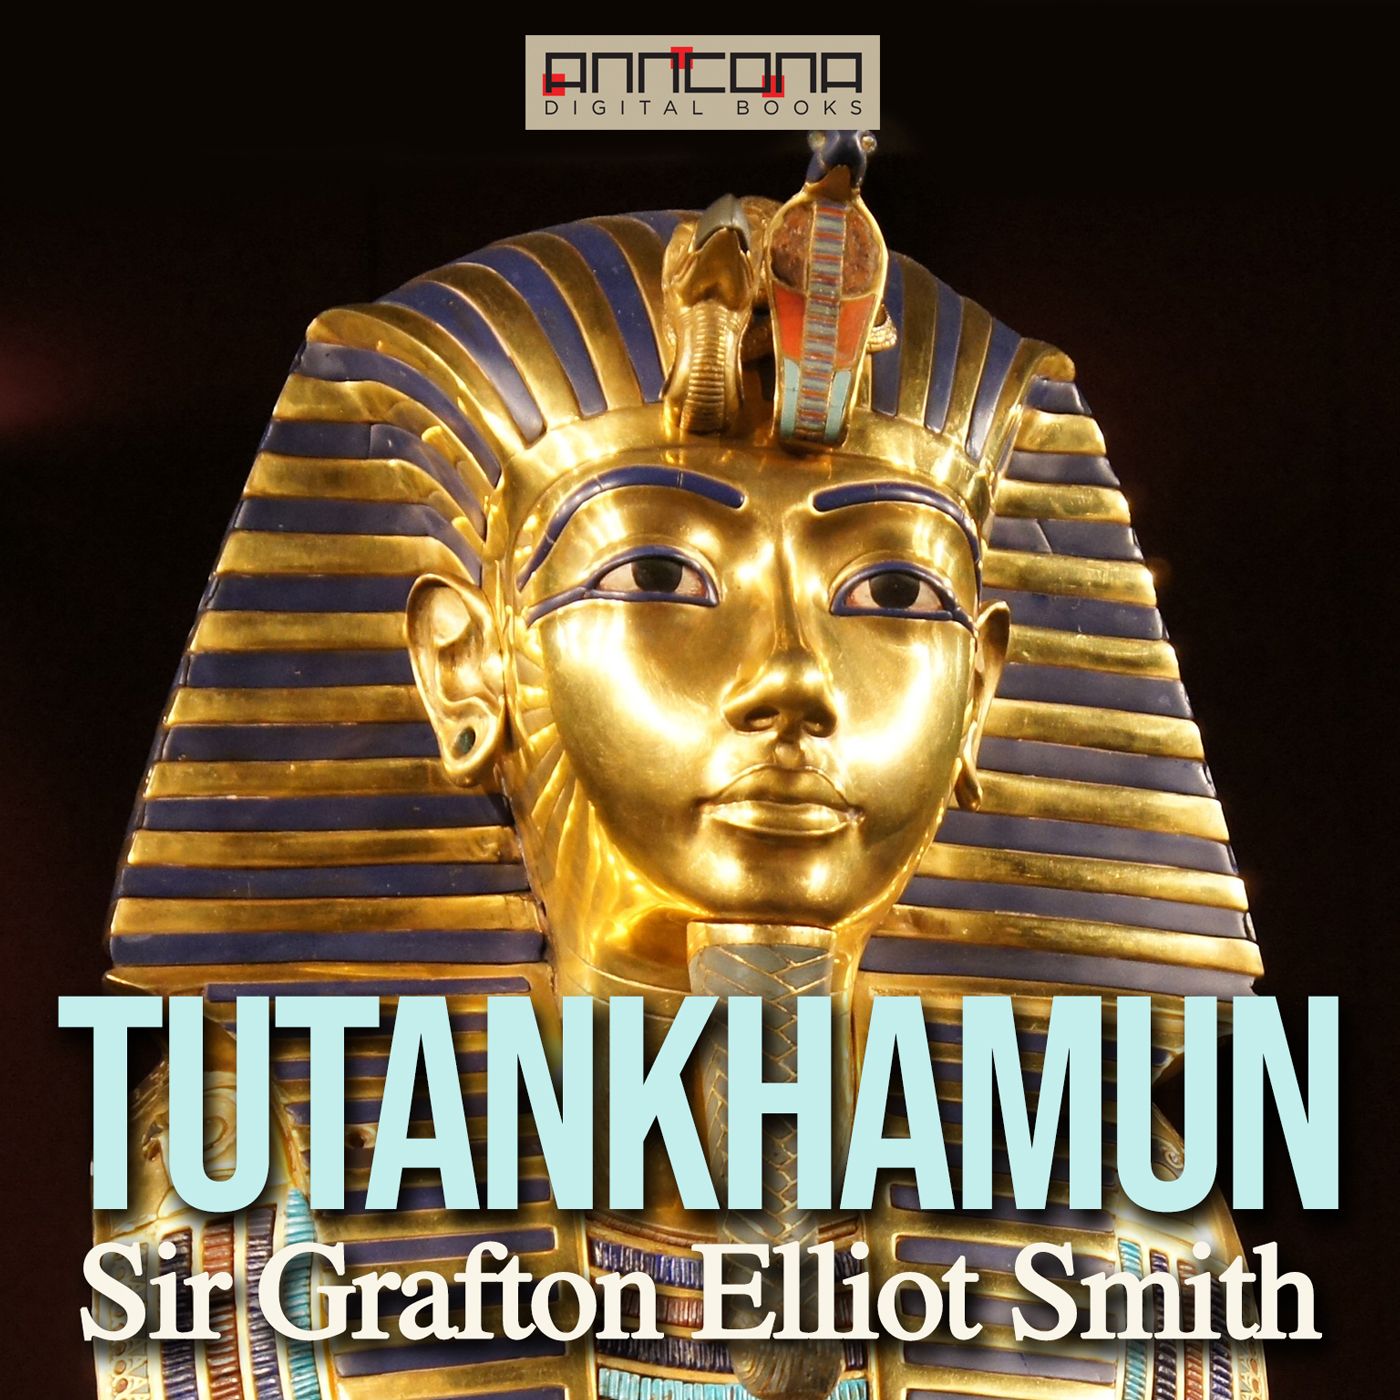 Tutankhamun - The Discovery of His Tomb, ljudbok av Sir Grafton Elliot Smith